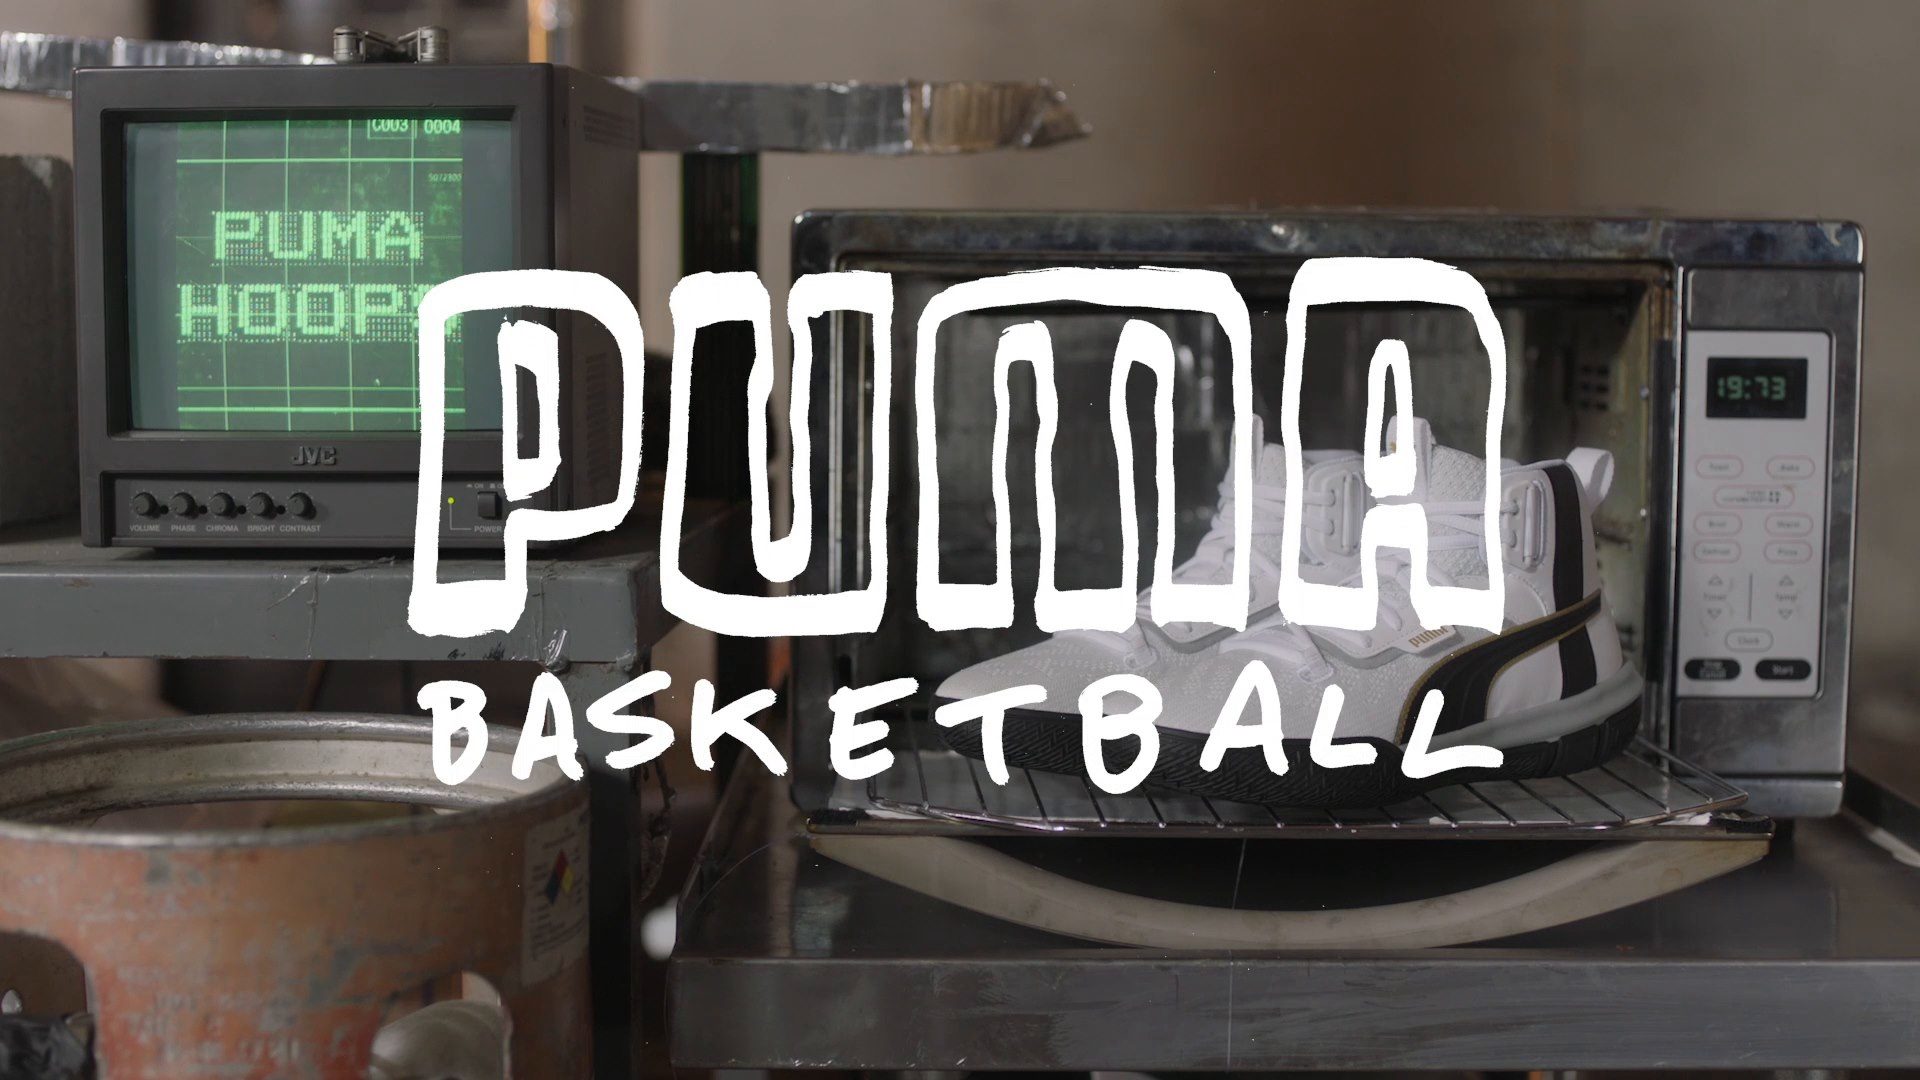 PUMA喺籃球方面又有新搞作！今次推出嘅PUMA Legacy係一對中筒籃球鞋，而且喺設計上仲特別著重包覆保護，追求支撐度同穩定性嘅你要密切留意喇~